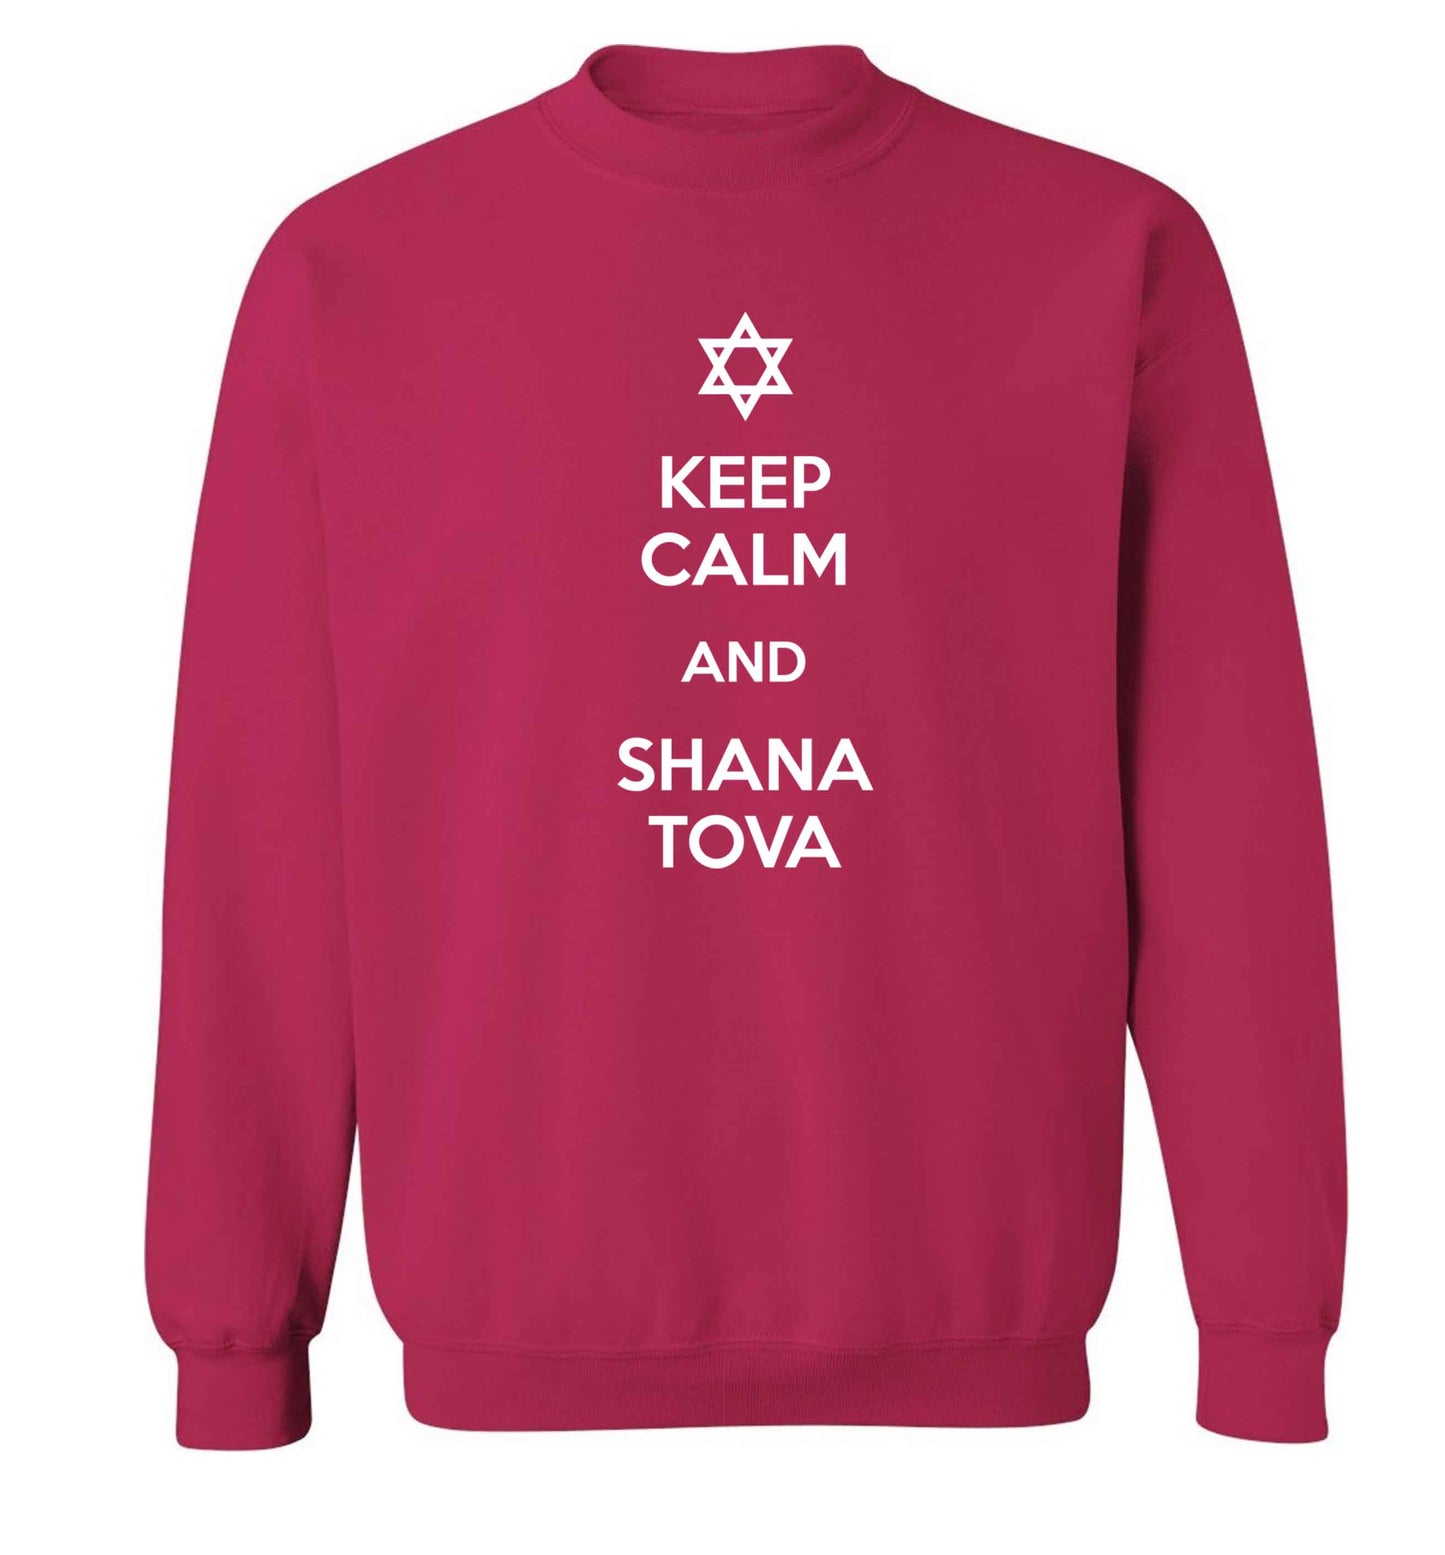 Keep calm and shana tova Adult's unisex pink Sweater 2XL